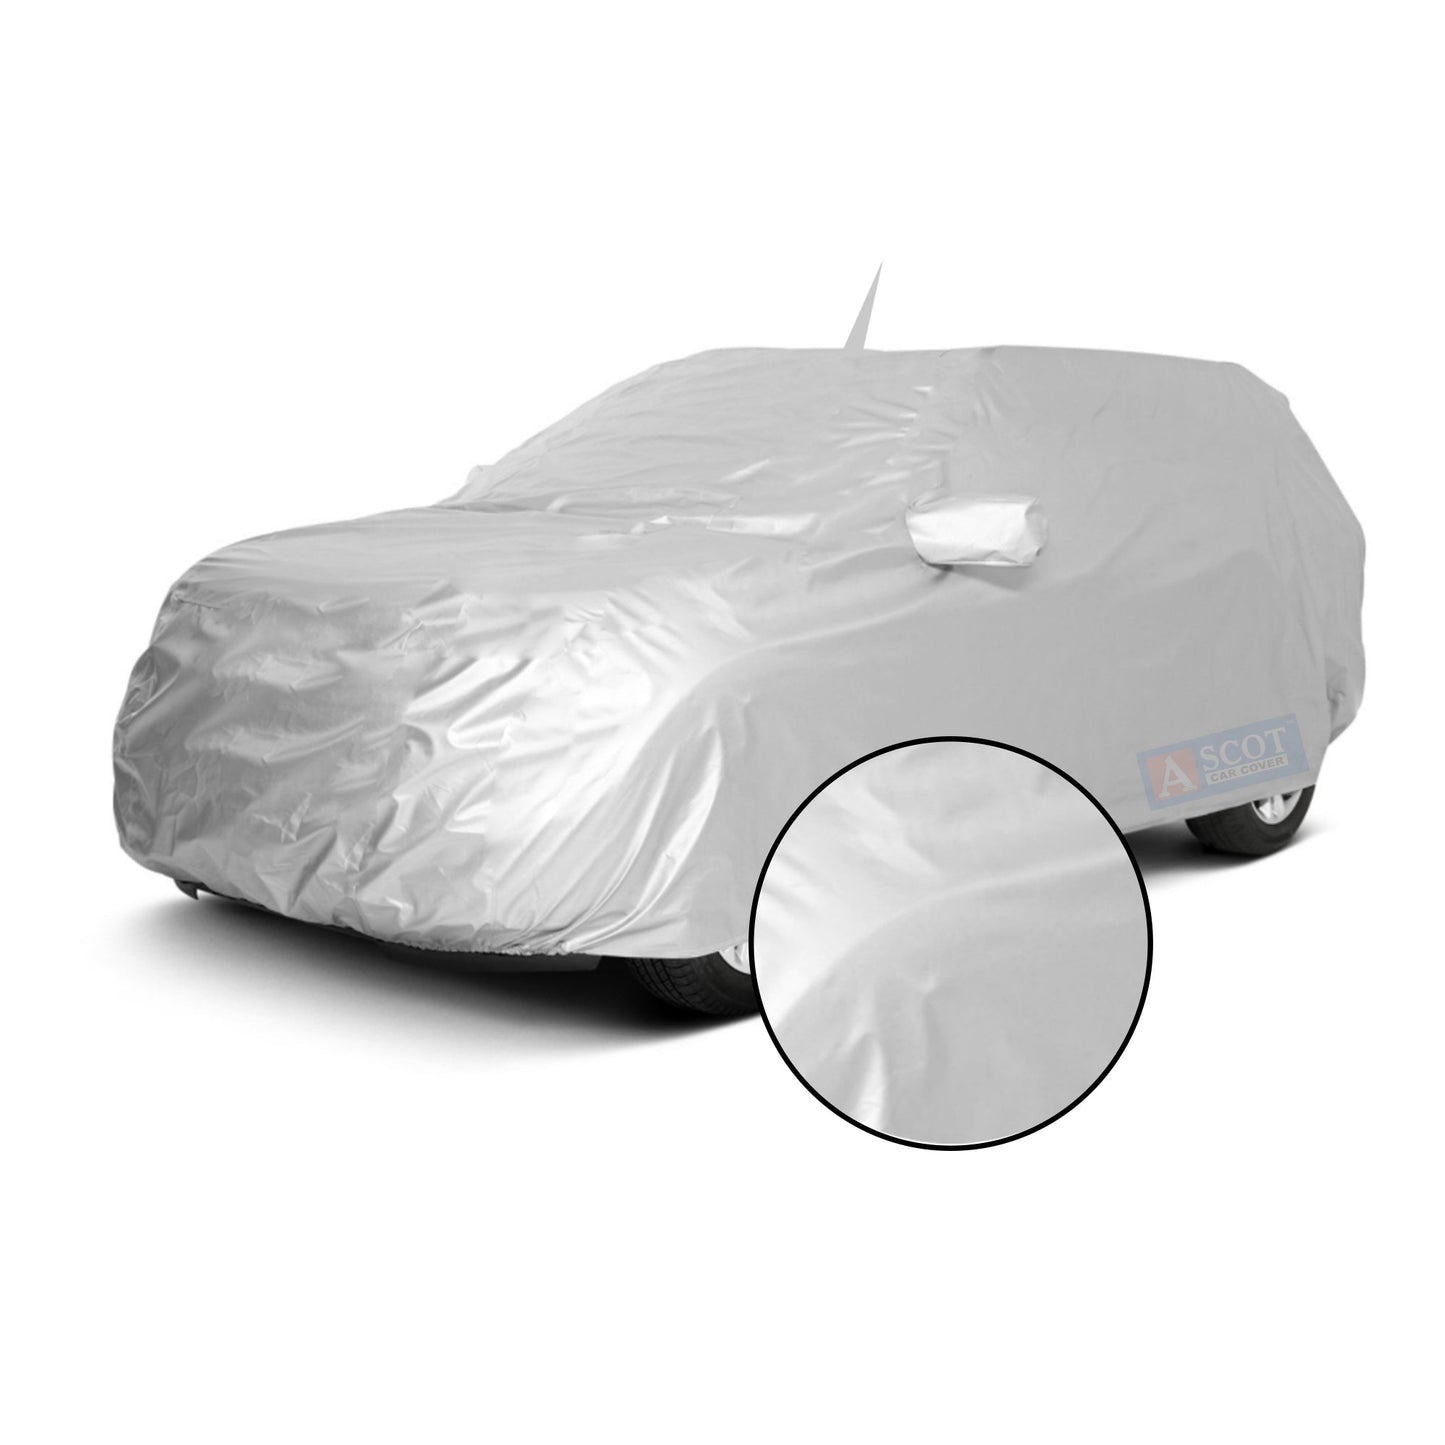 Ascot Tata Tigor Car Body Cover Dust Proof, Trippel Stitched